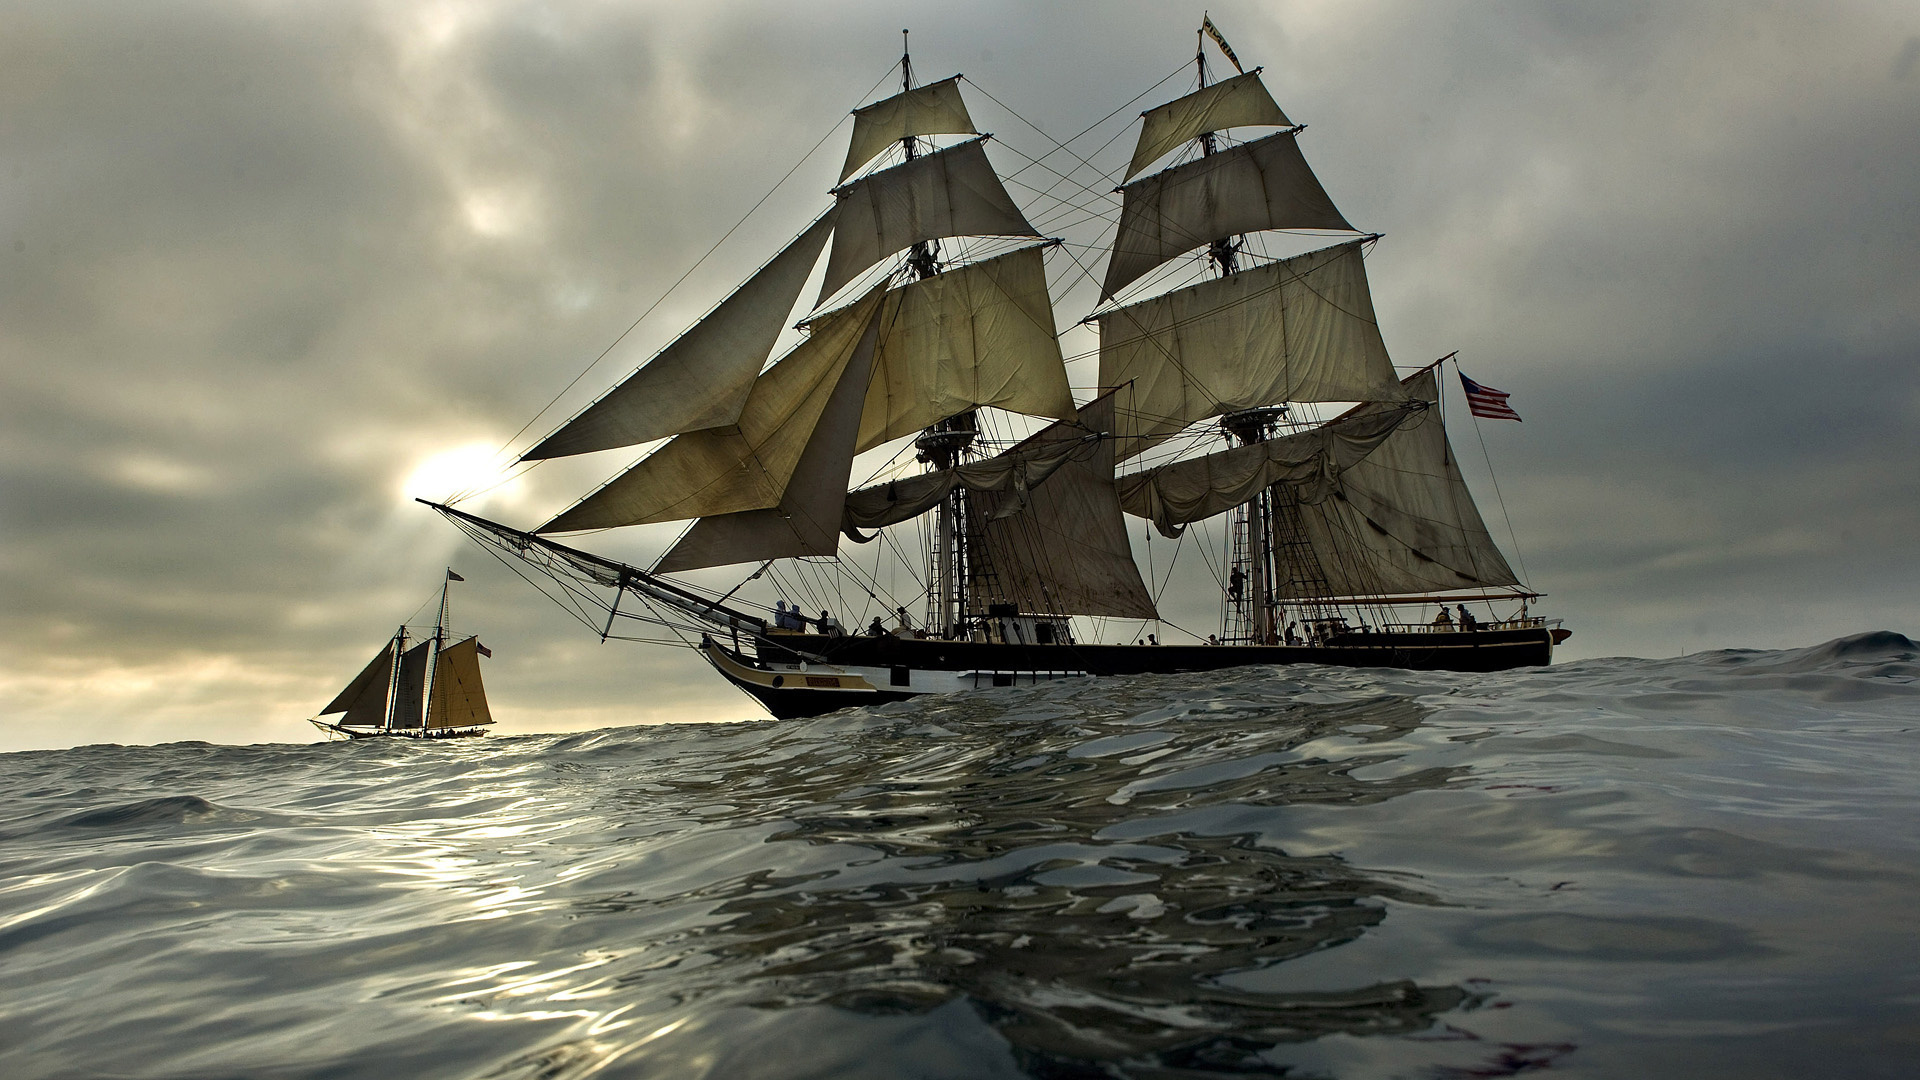 Schooner: Boats, Ocean, Sea, Sailing, Galleon, A ship with two masts. 1920x1080 Full HD Wallpaper.